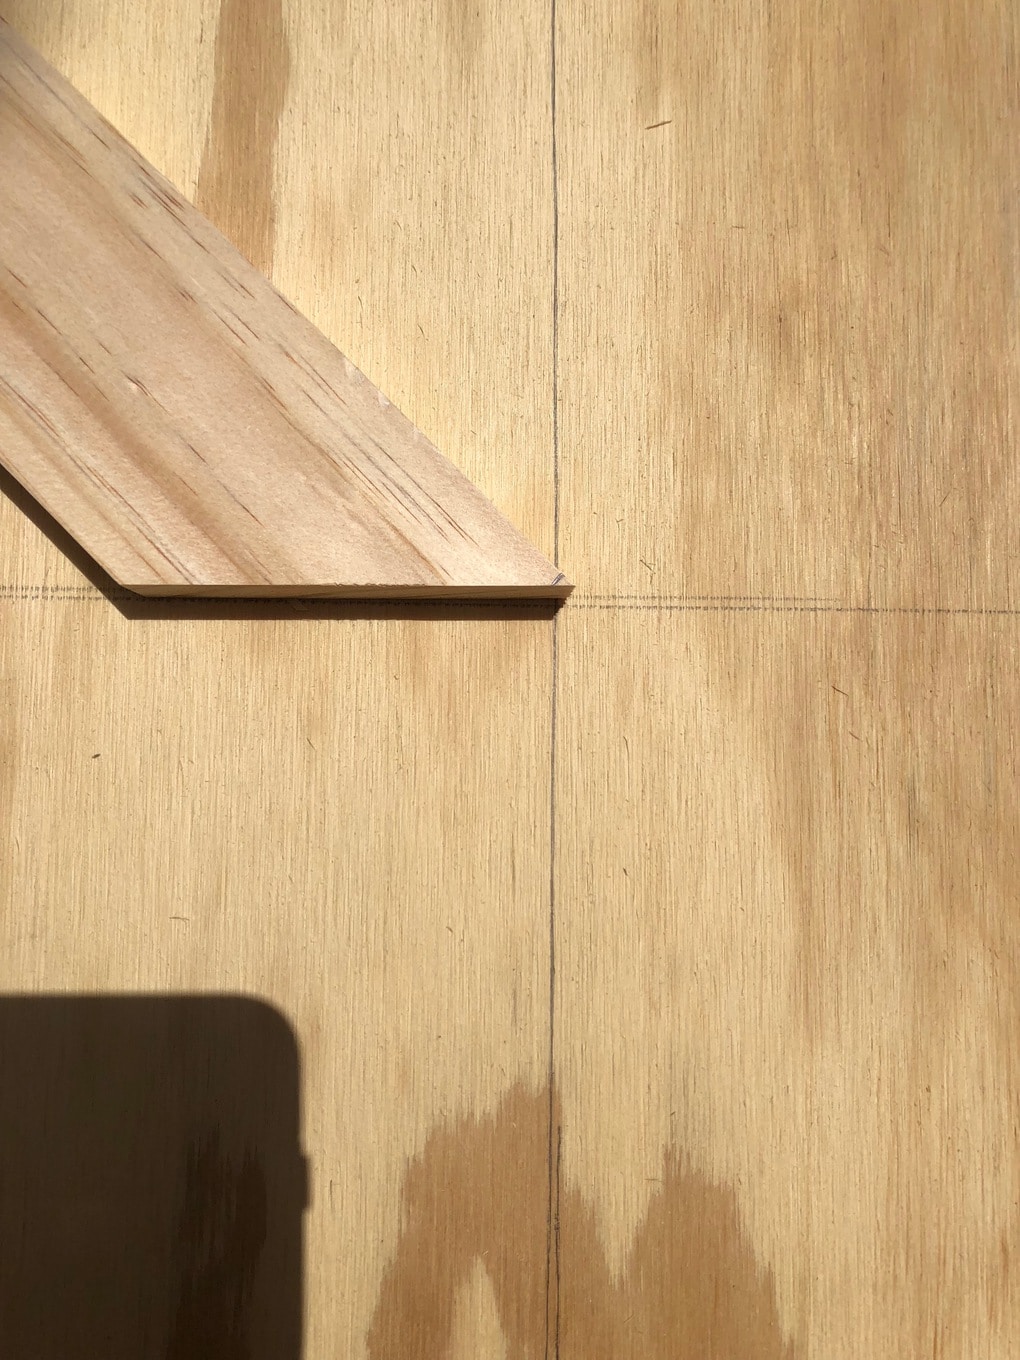 how to make DIY wood art work